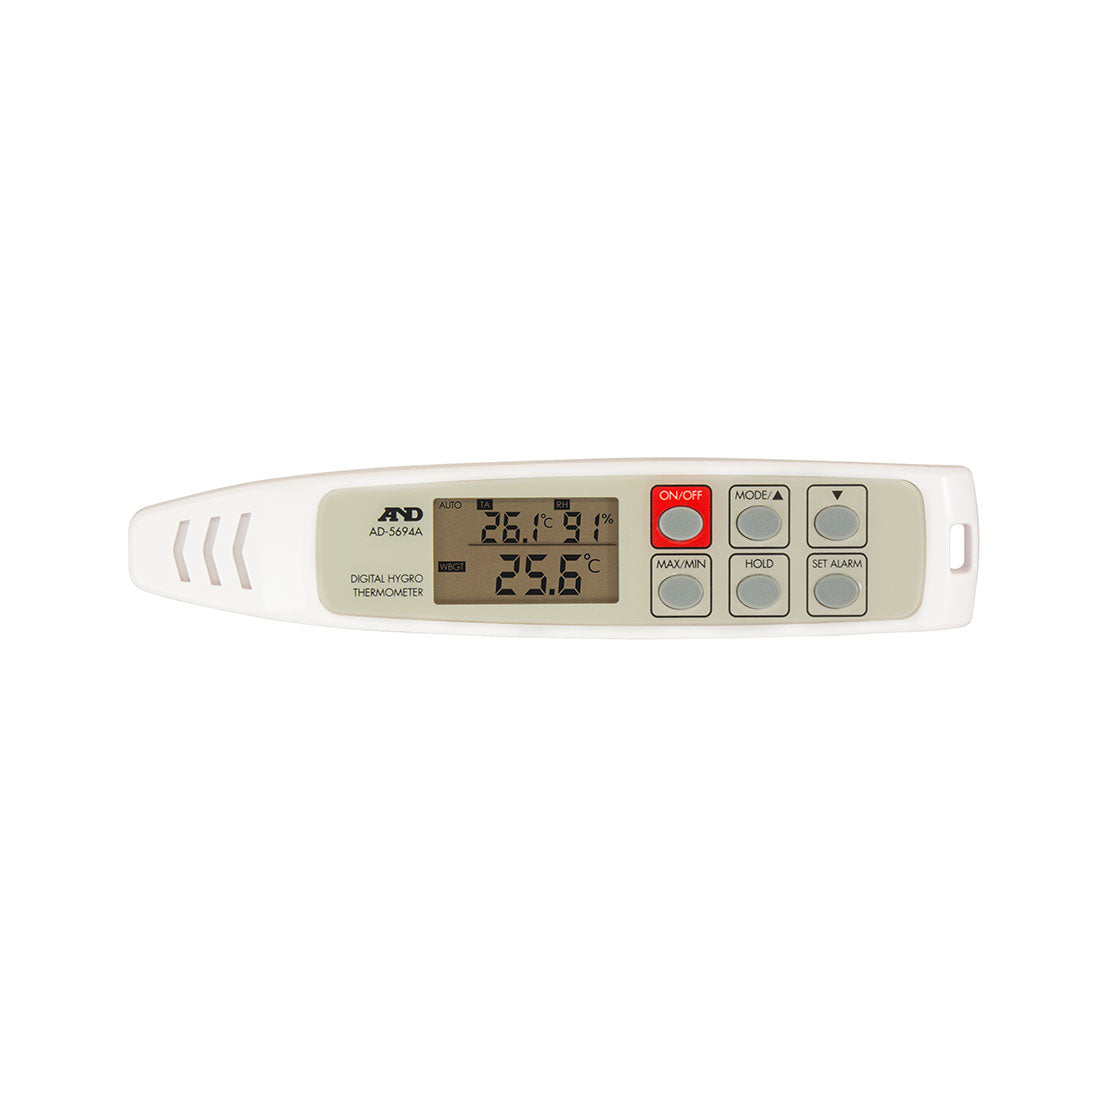 携帯形 熱中症指数計 / 熱中症指数モニター・温湿度計 AD-5694A